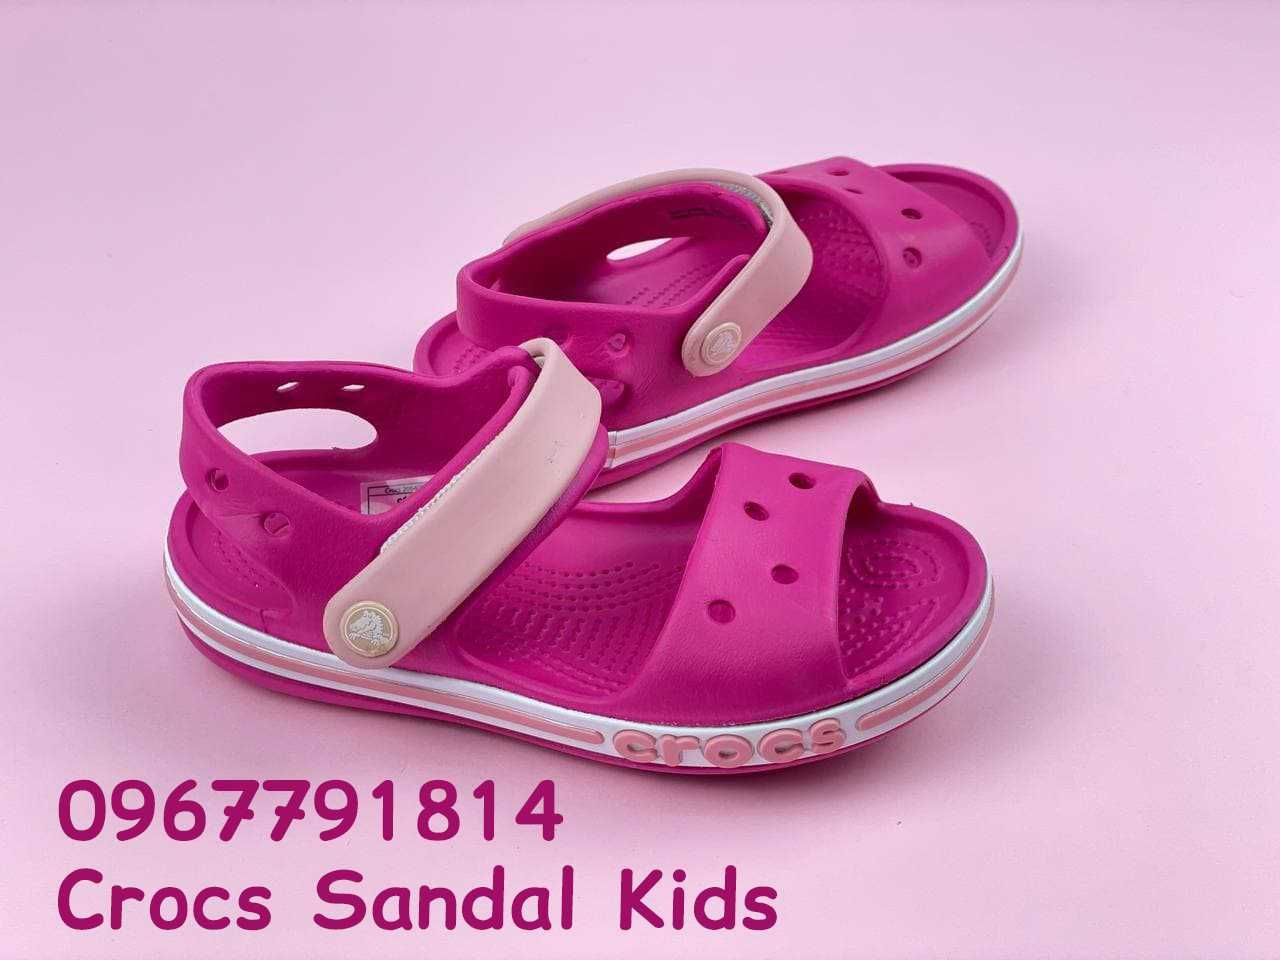 Детские сандали KIDS bayaband sandal